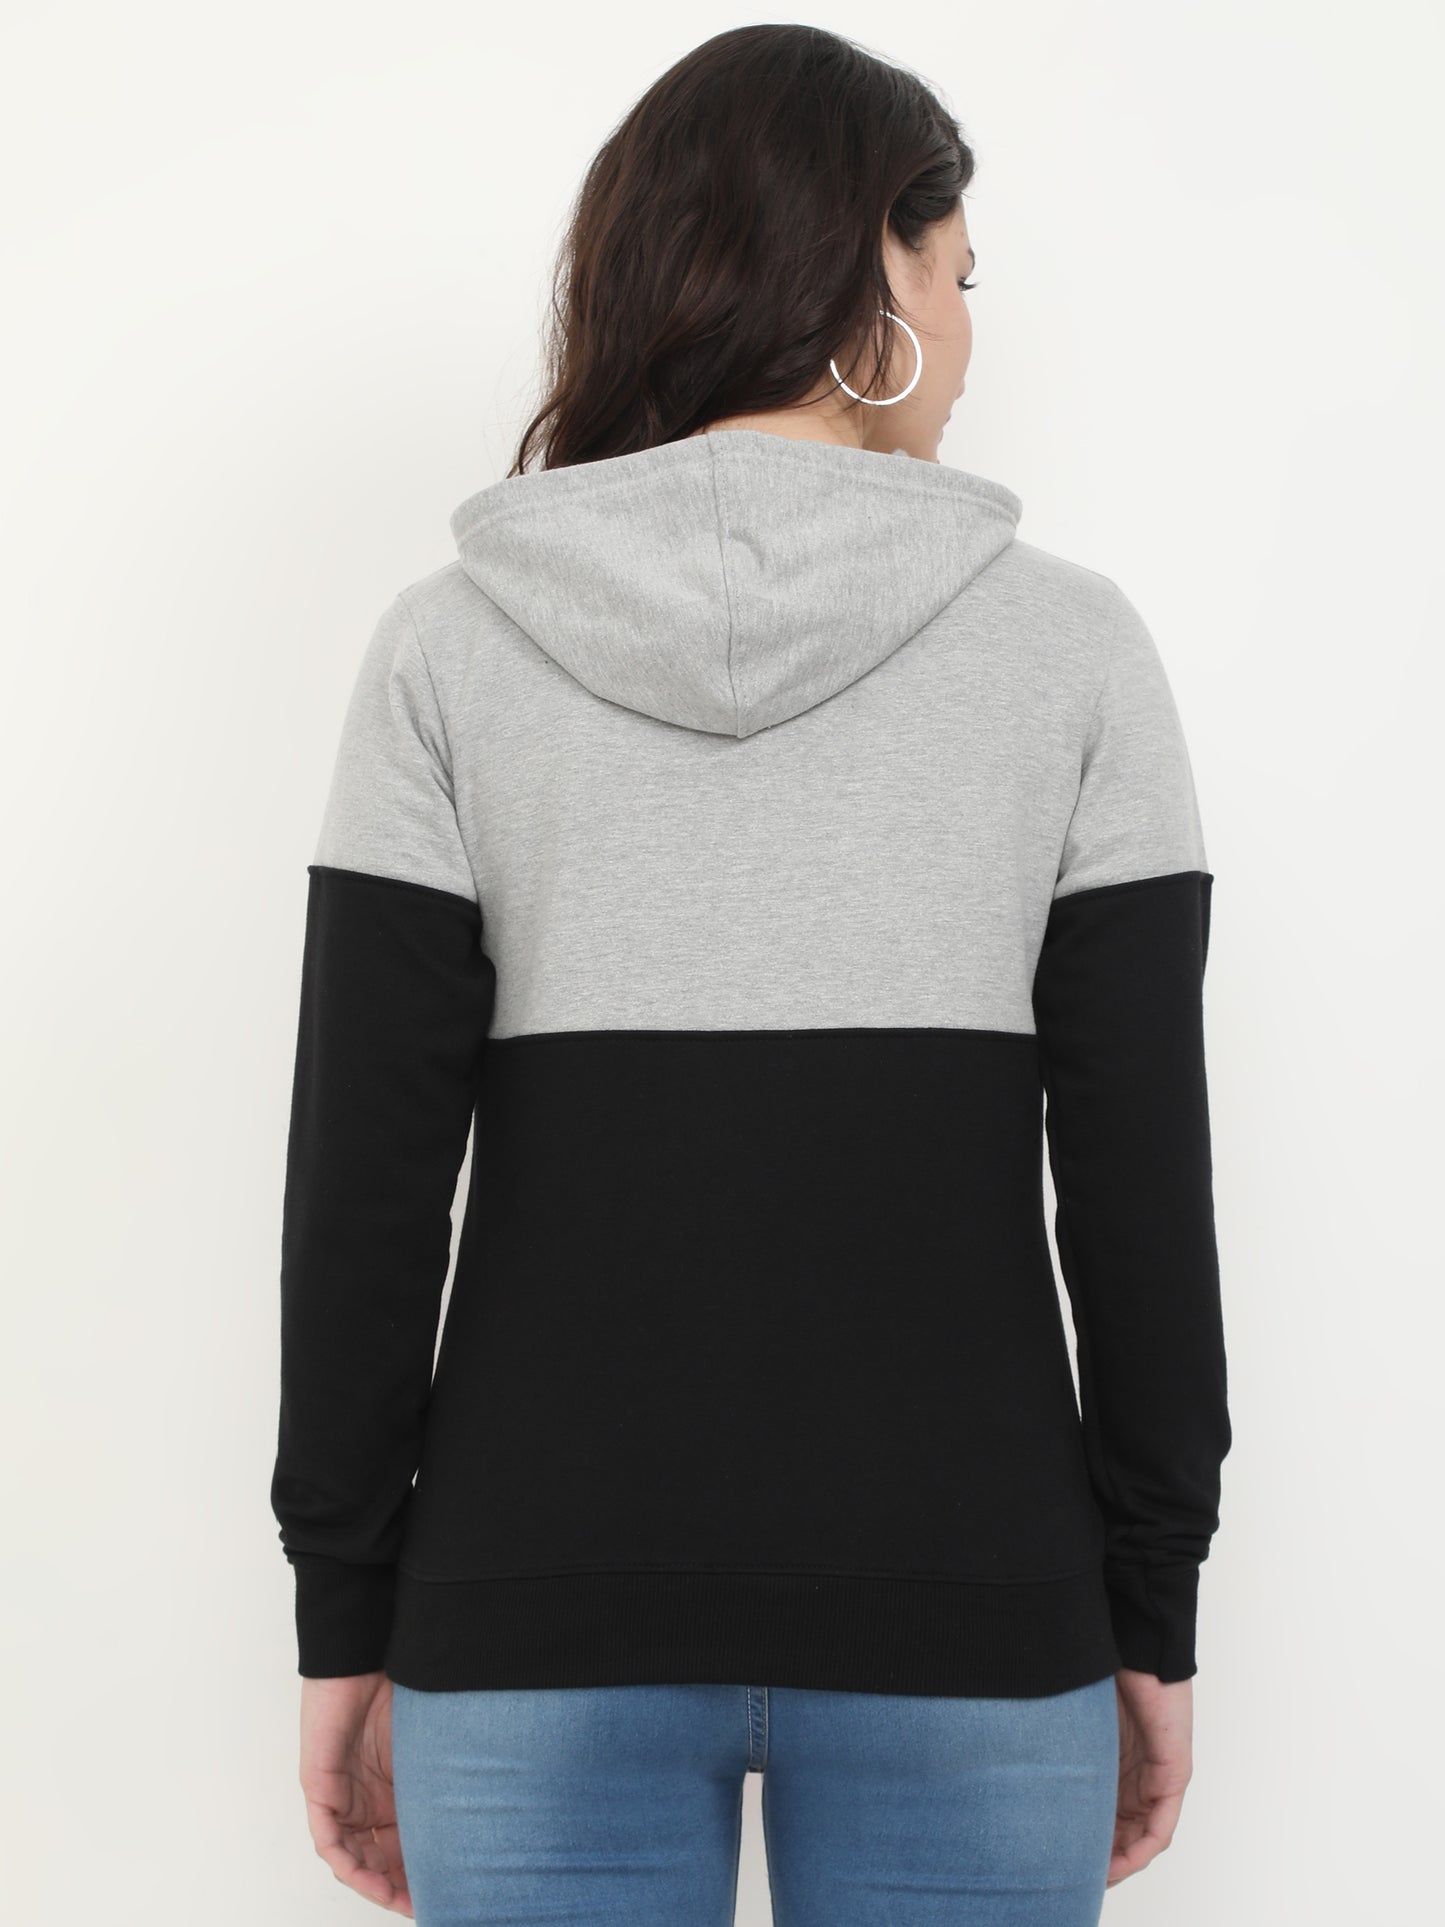 Women's Cotton Printed Greyblack Color Sweatshirt/Hoodies